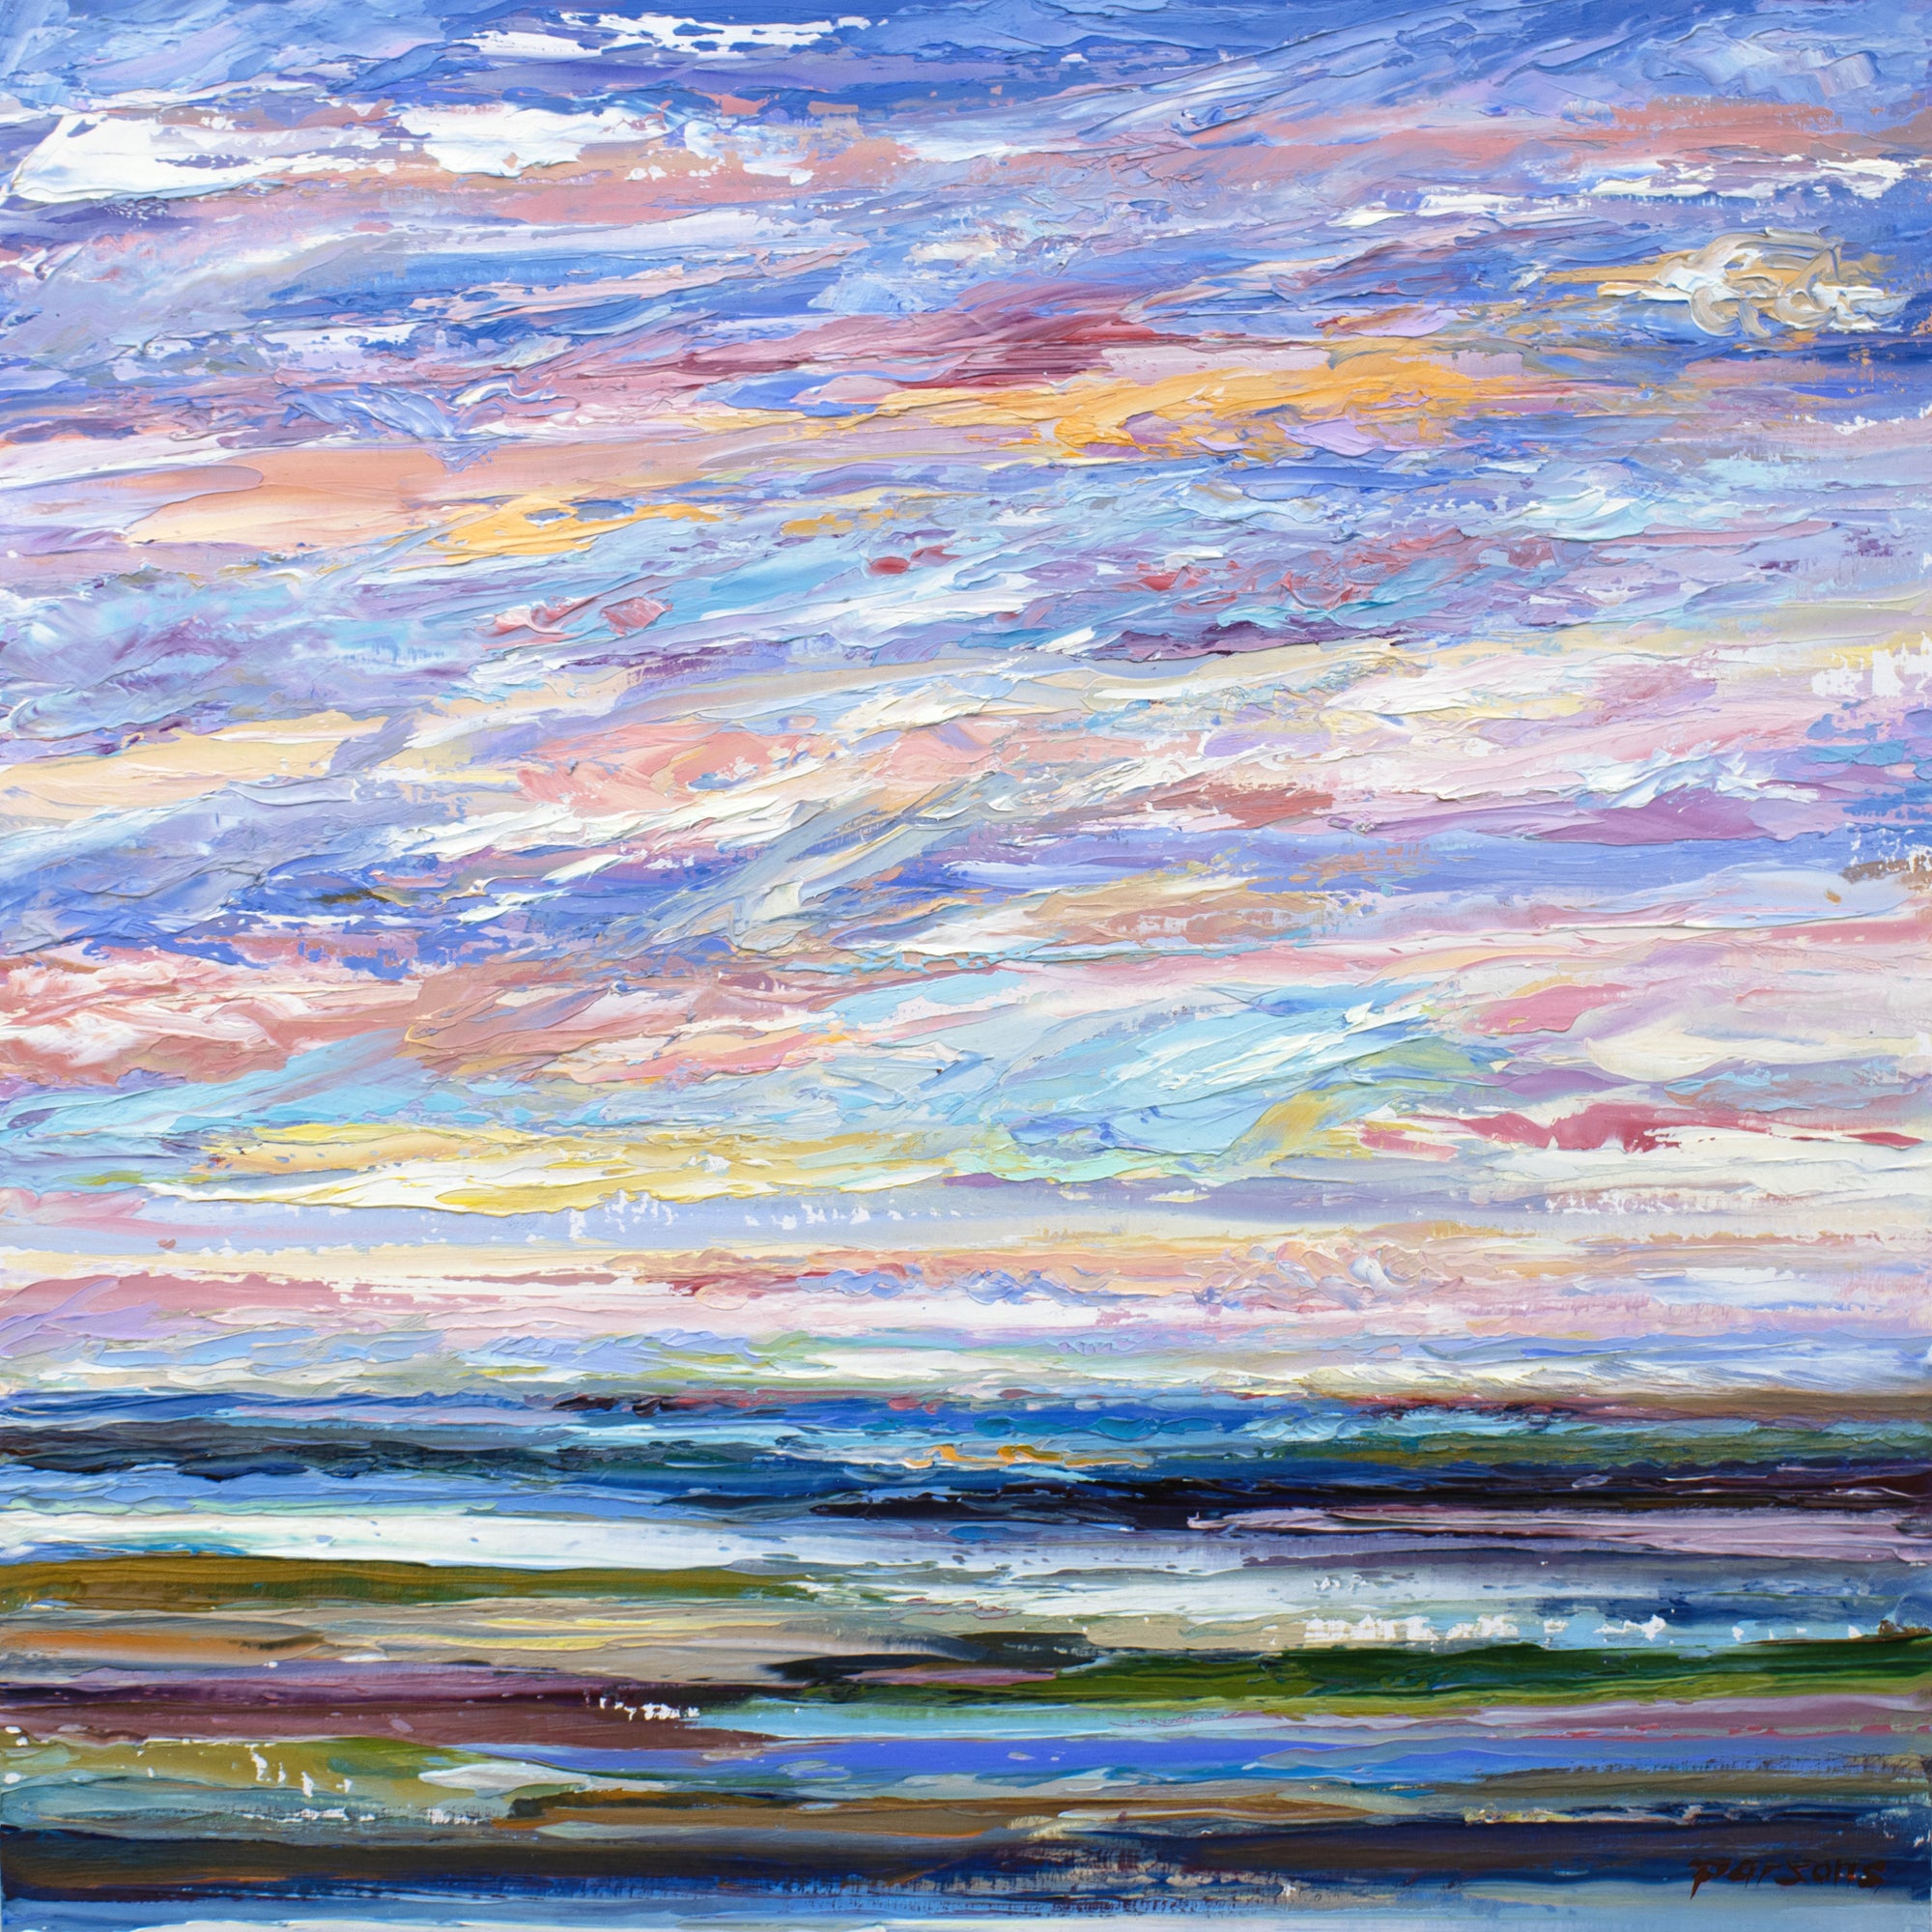 Sunset, Cape Cod. Oil on cradled birch panel.